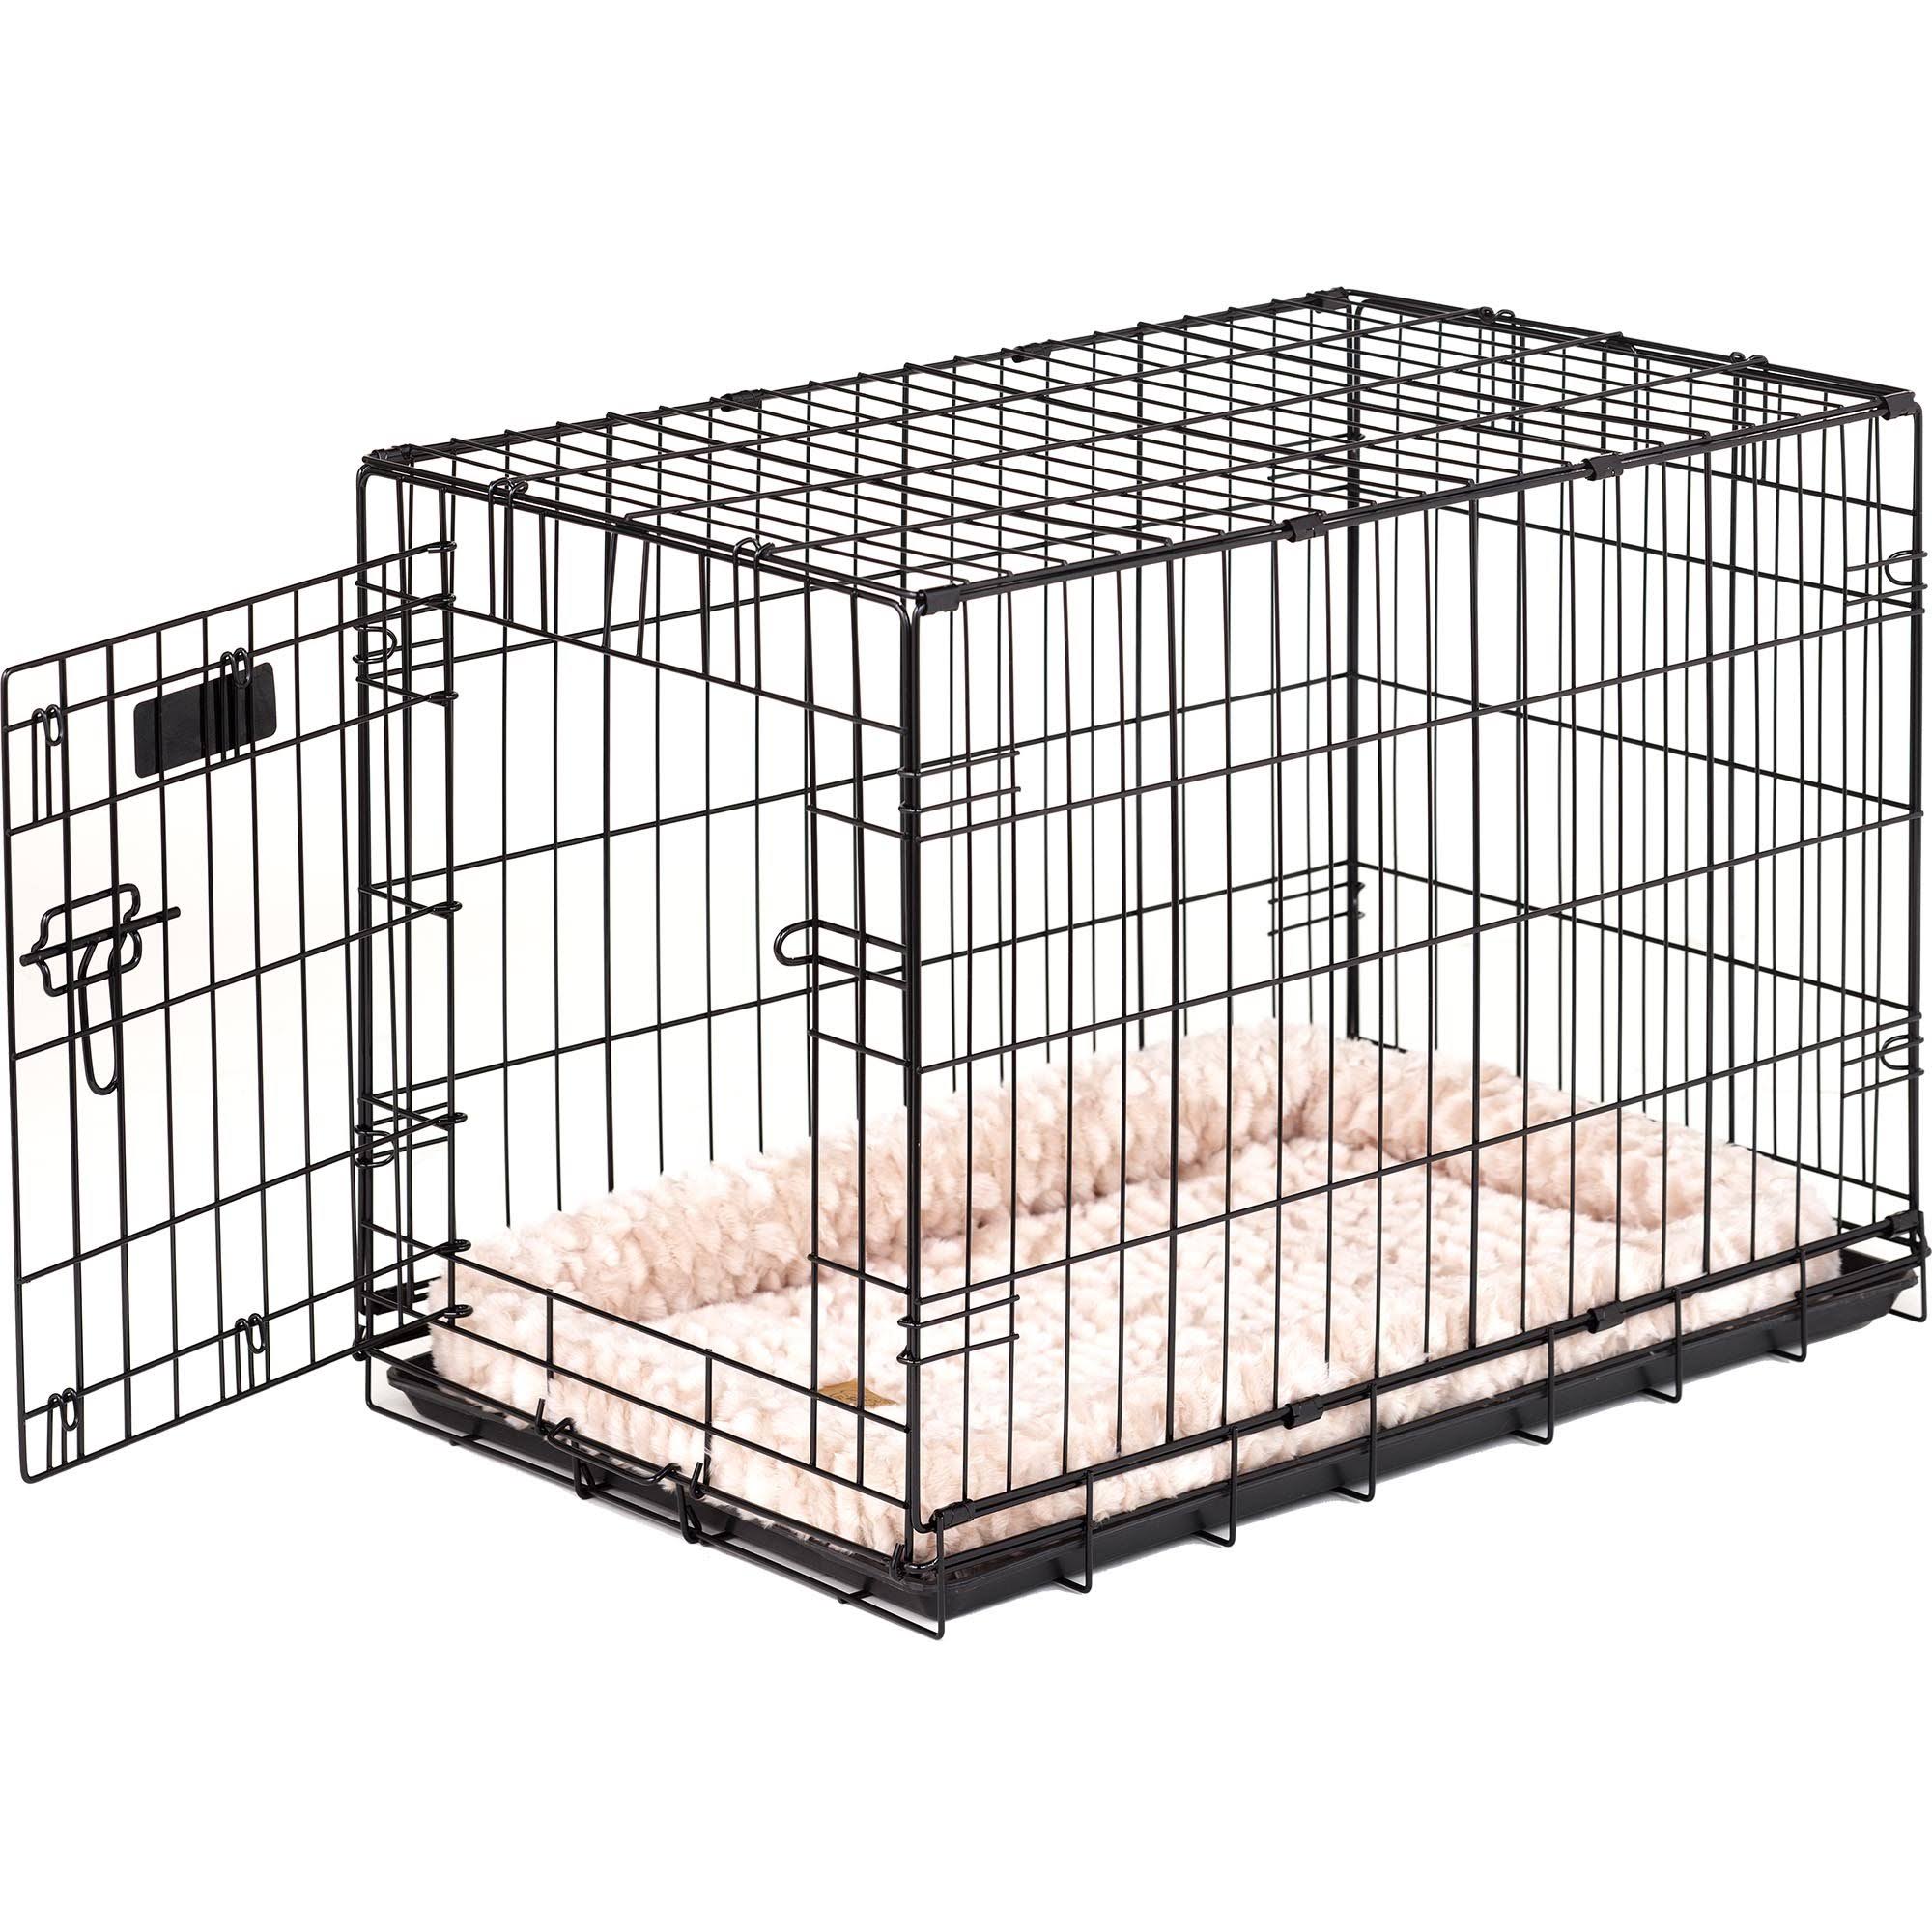 Precision Pet Products 3000 Provalu2 Dog Crate - Black , 30" x 19" x 21", 1 Door